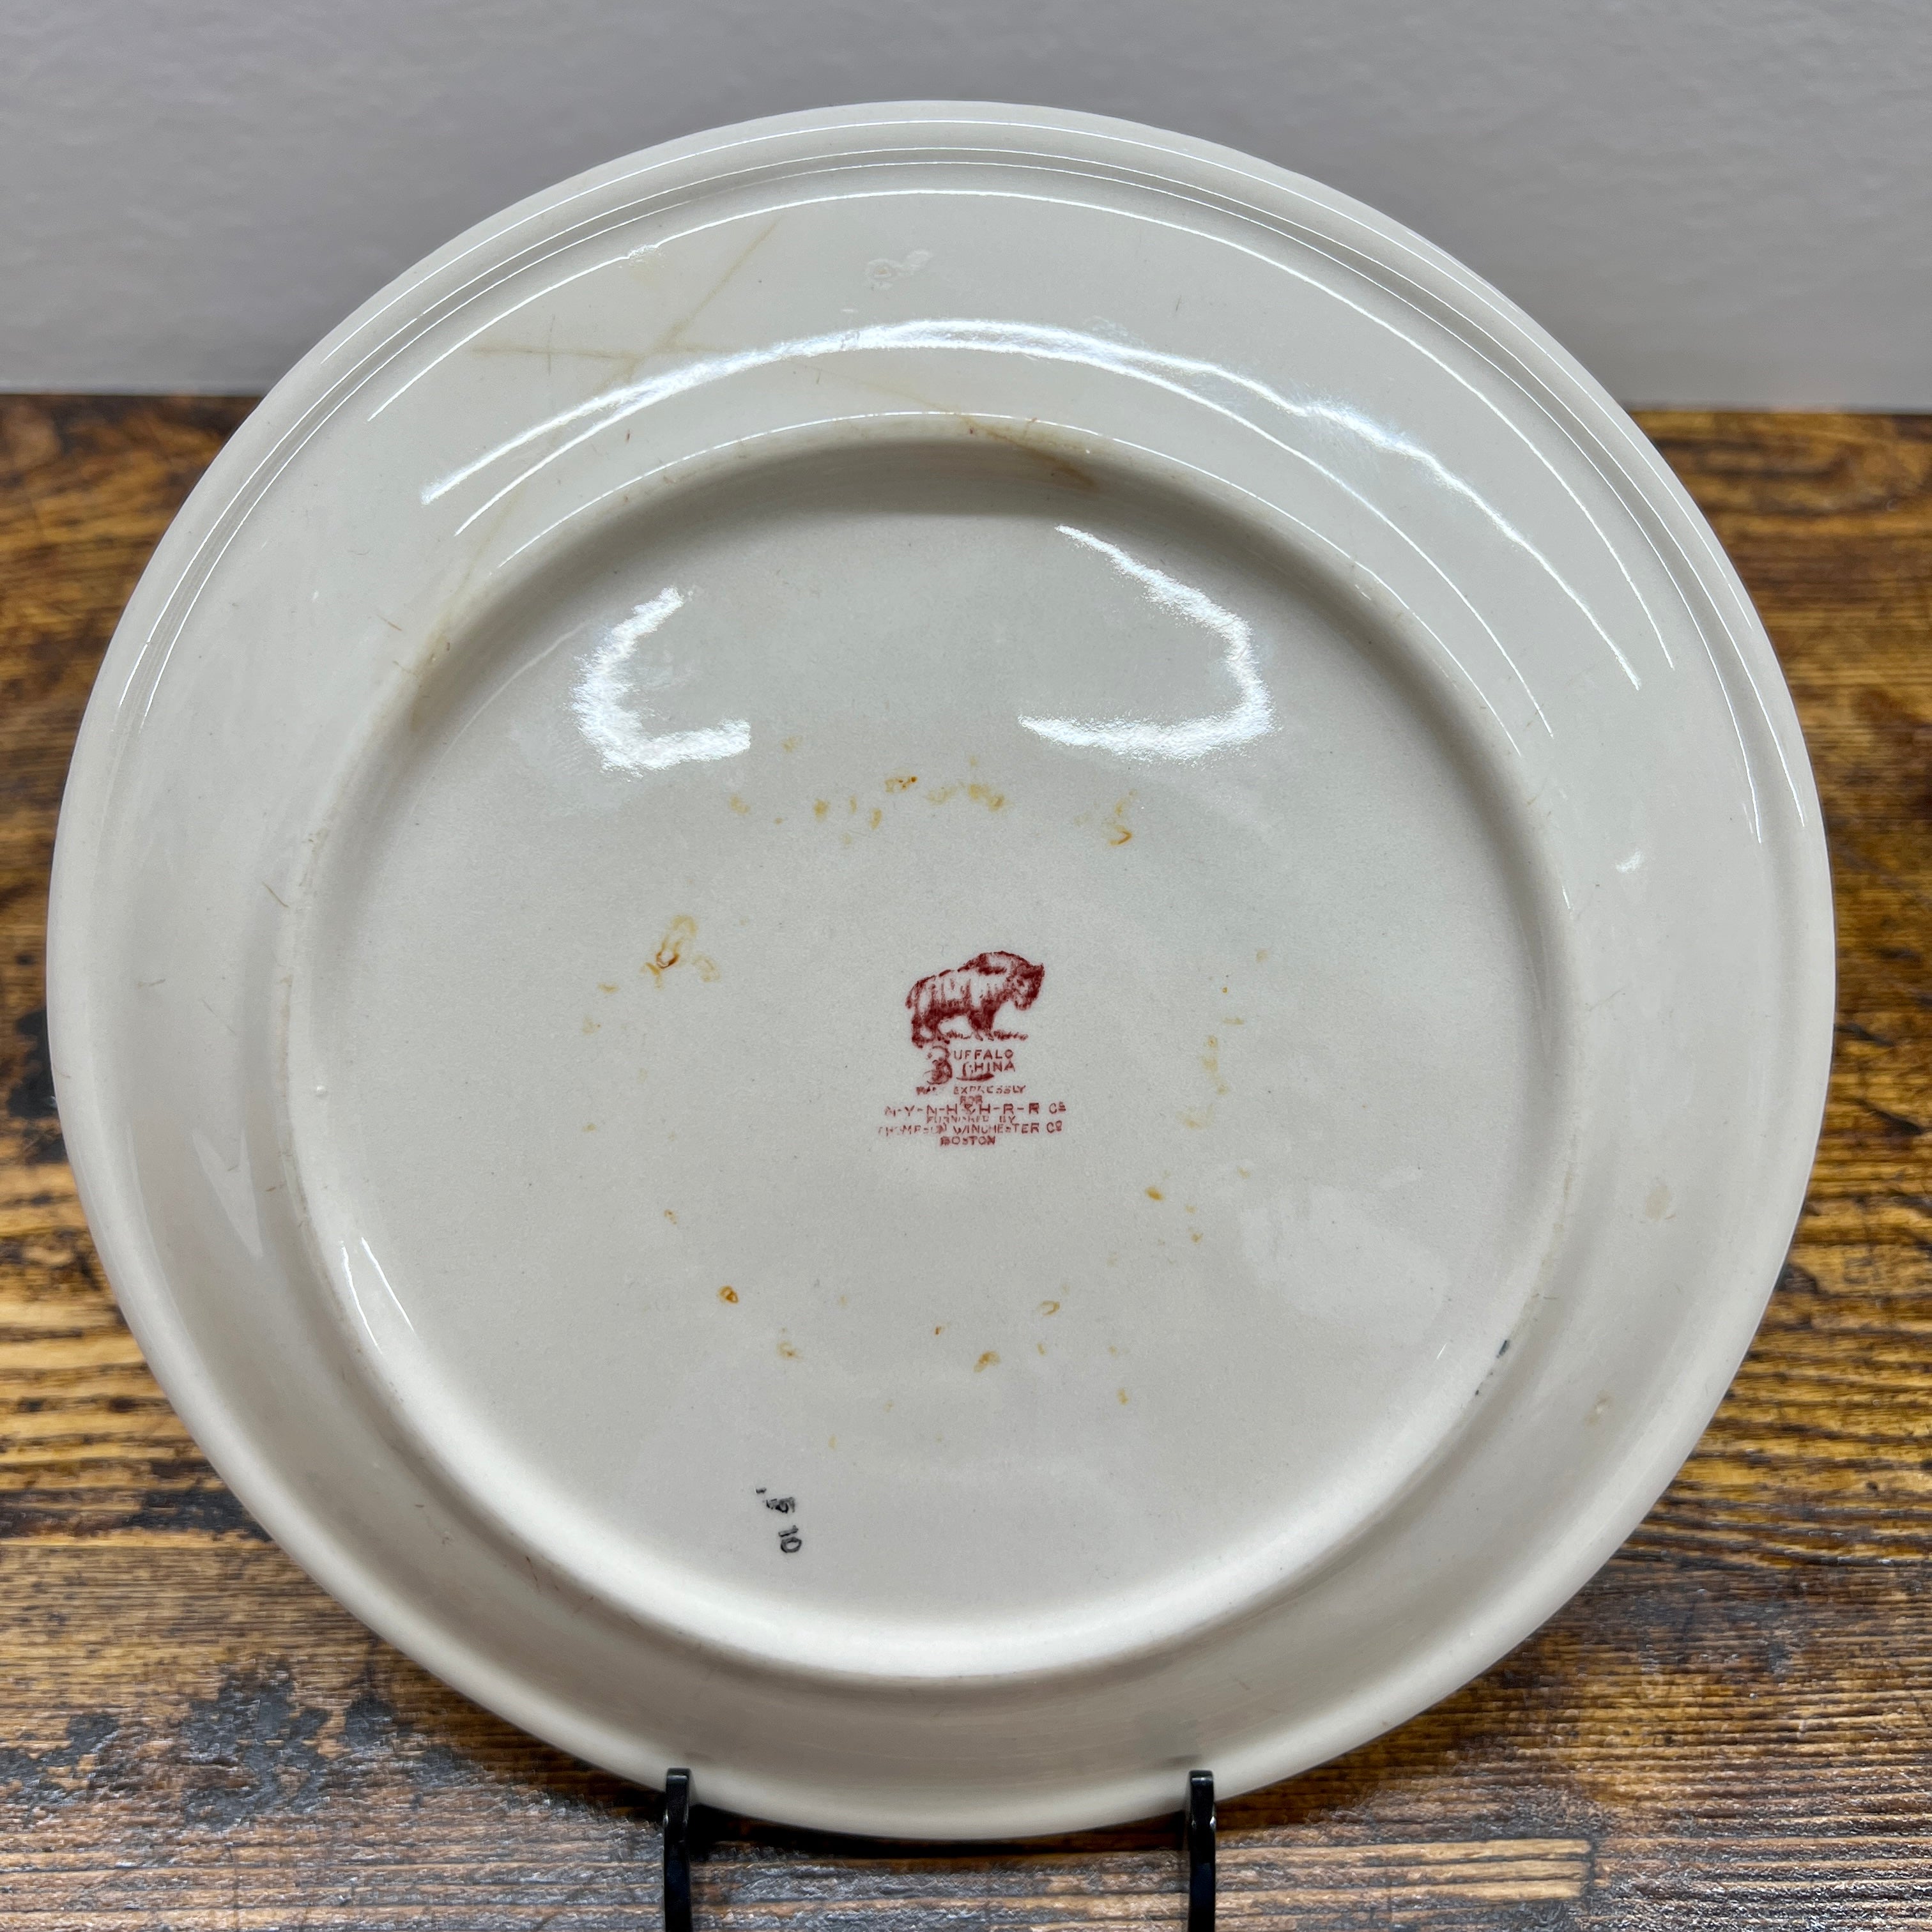 New York, New Haven & Hartford Railroad Souvenir China Plate (Ver. 2)